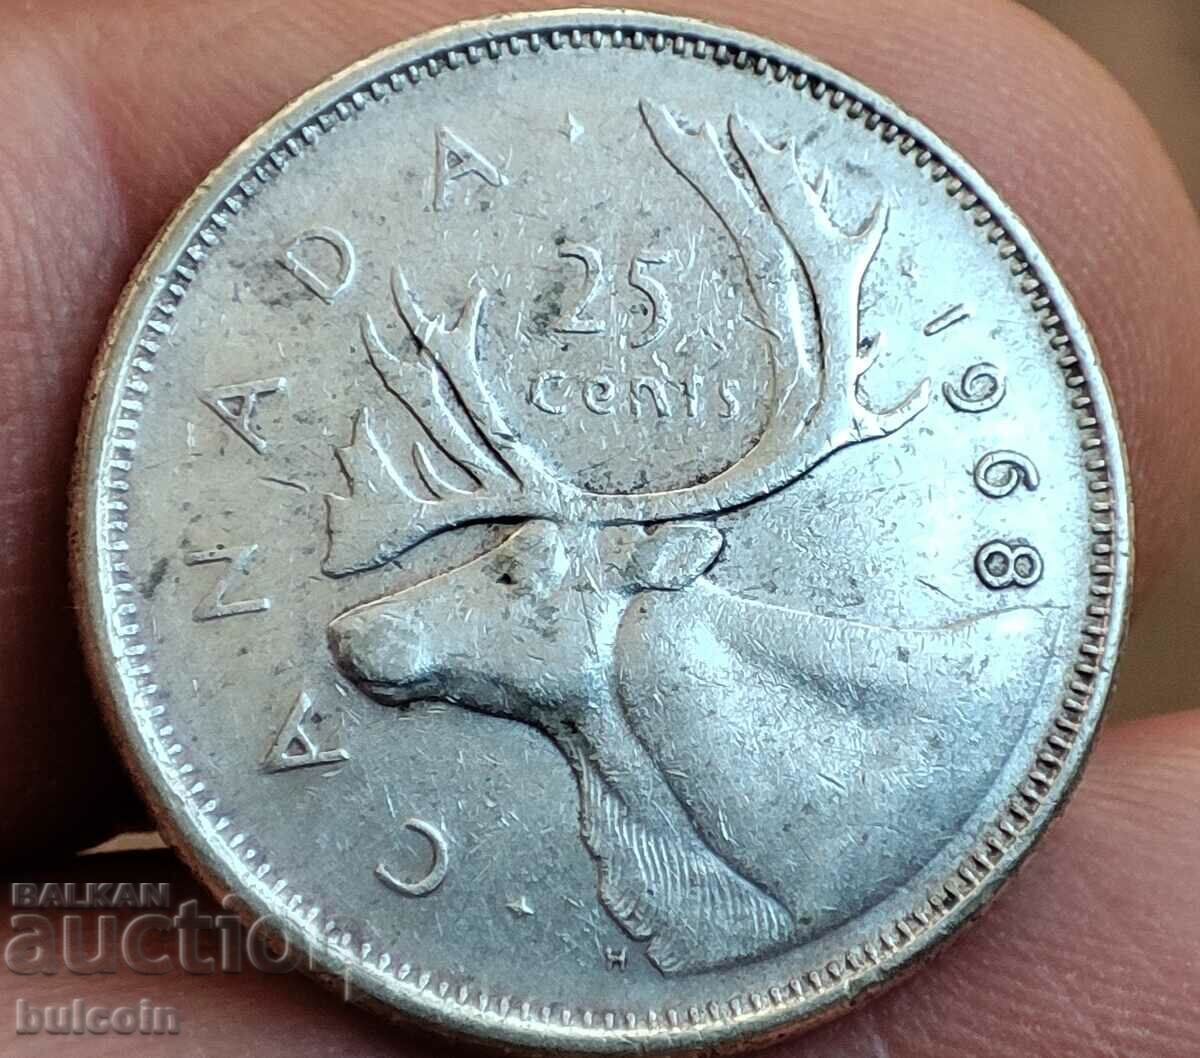 CANADA SILVER COIN 25 CENTS 1968